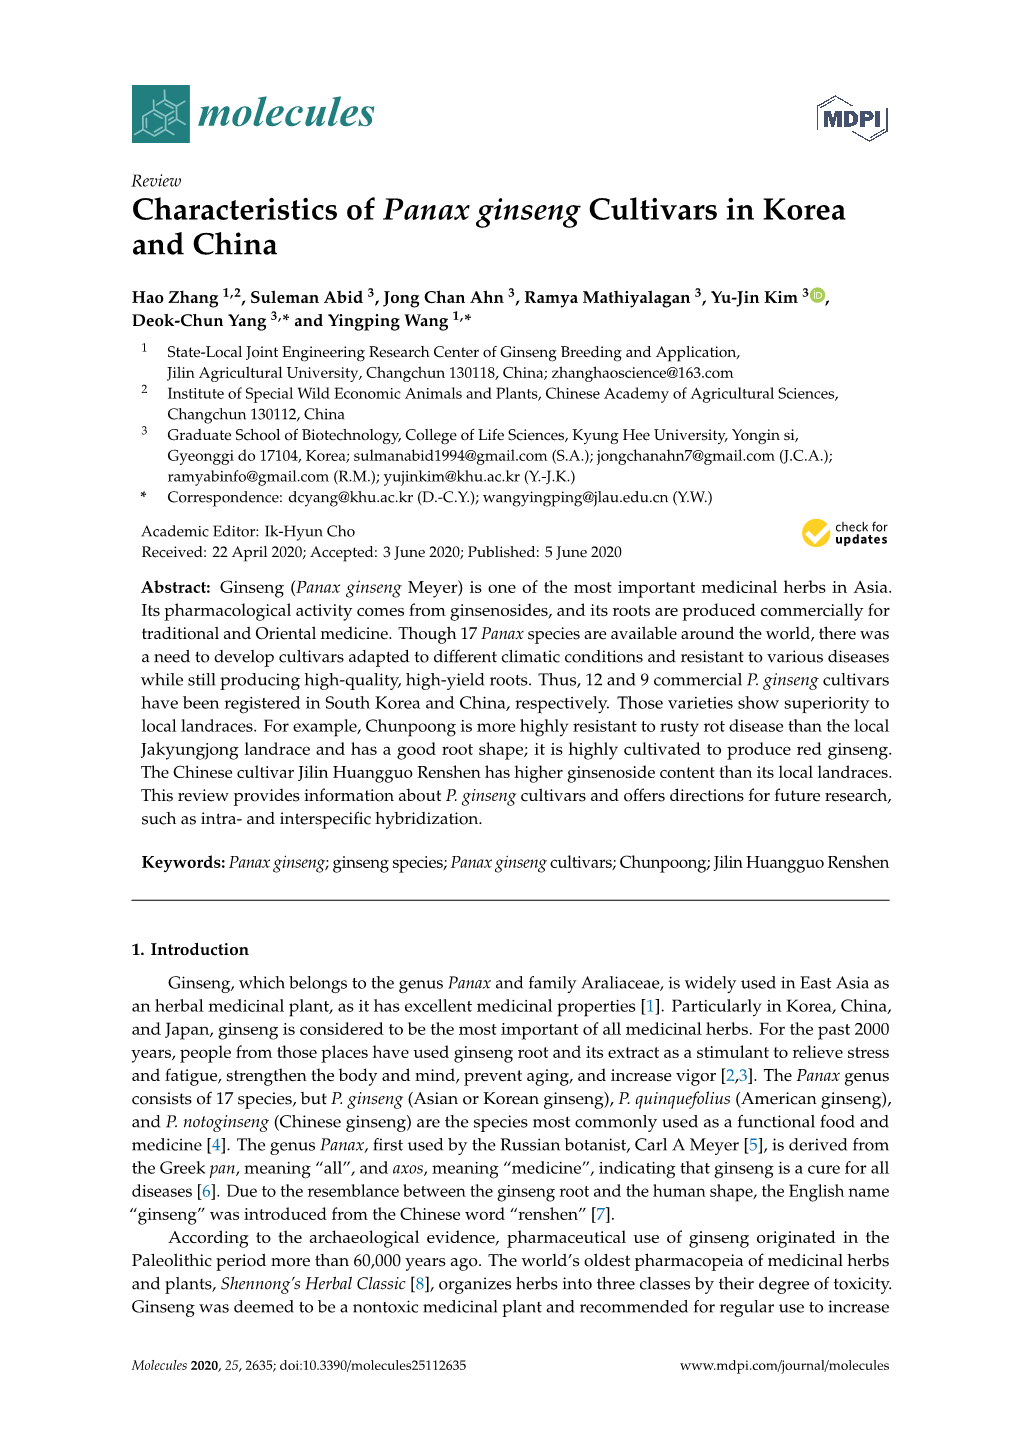 Characteristics of Panax Ginseng Cultivars in Korea and China